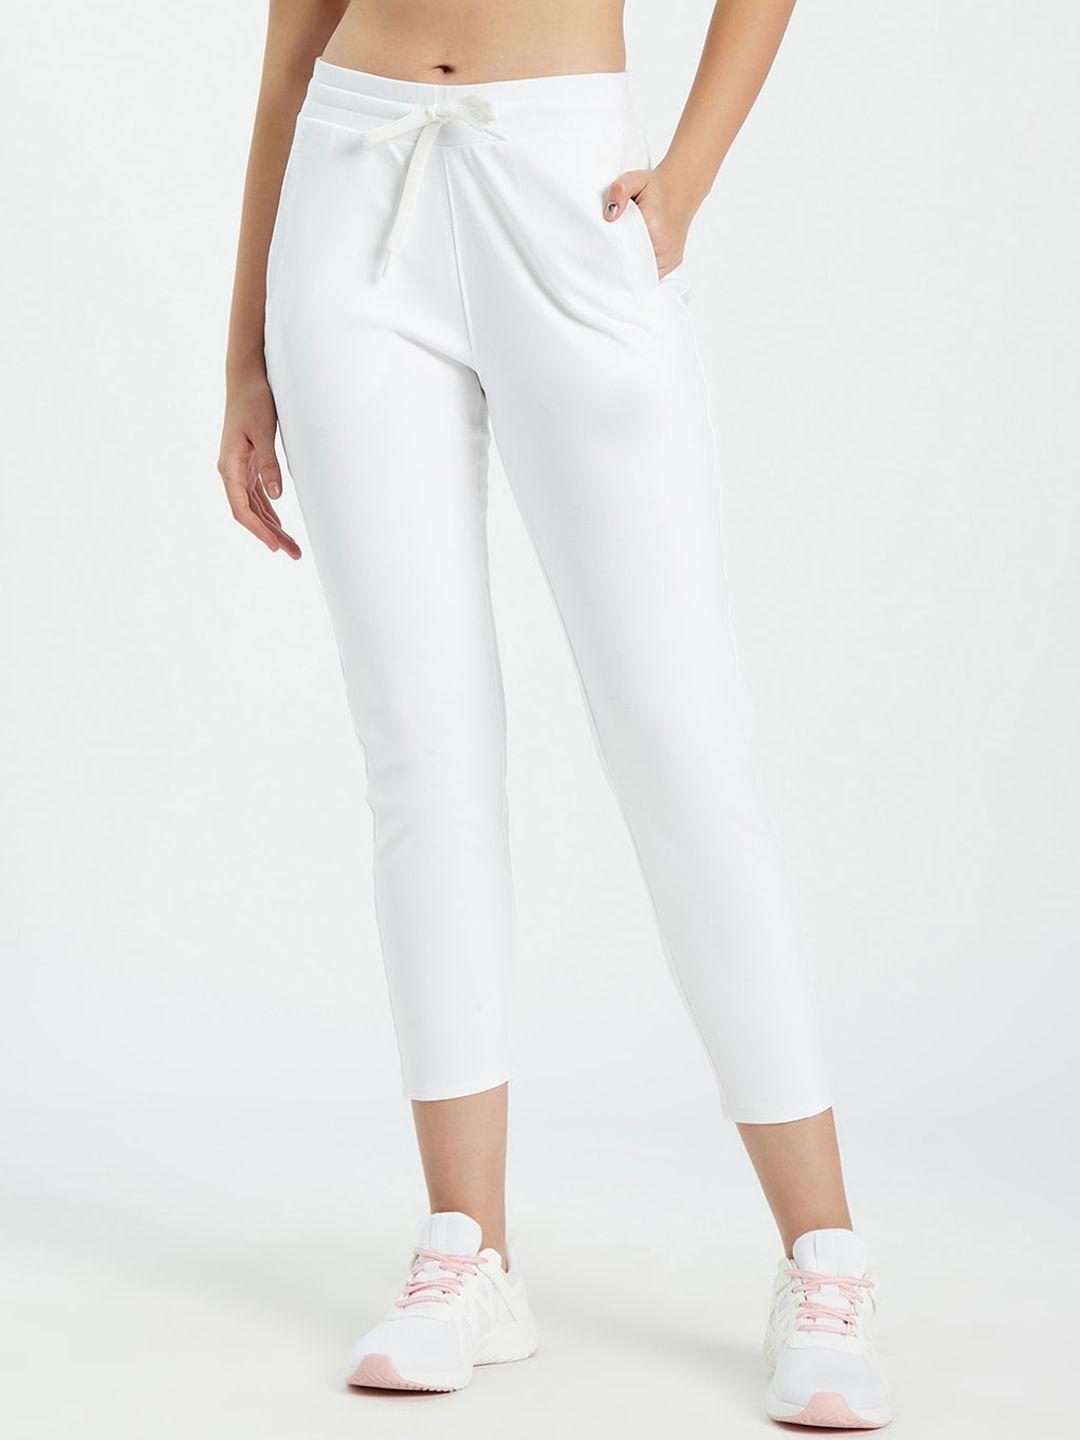 edrio women white solid cotton track pants